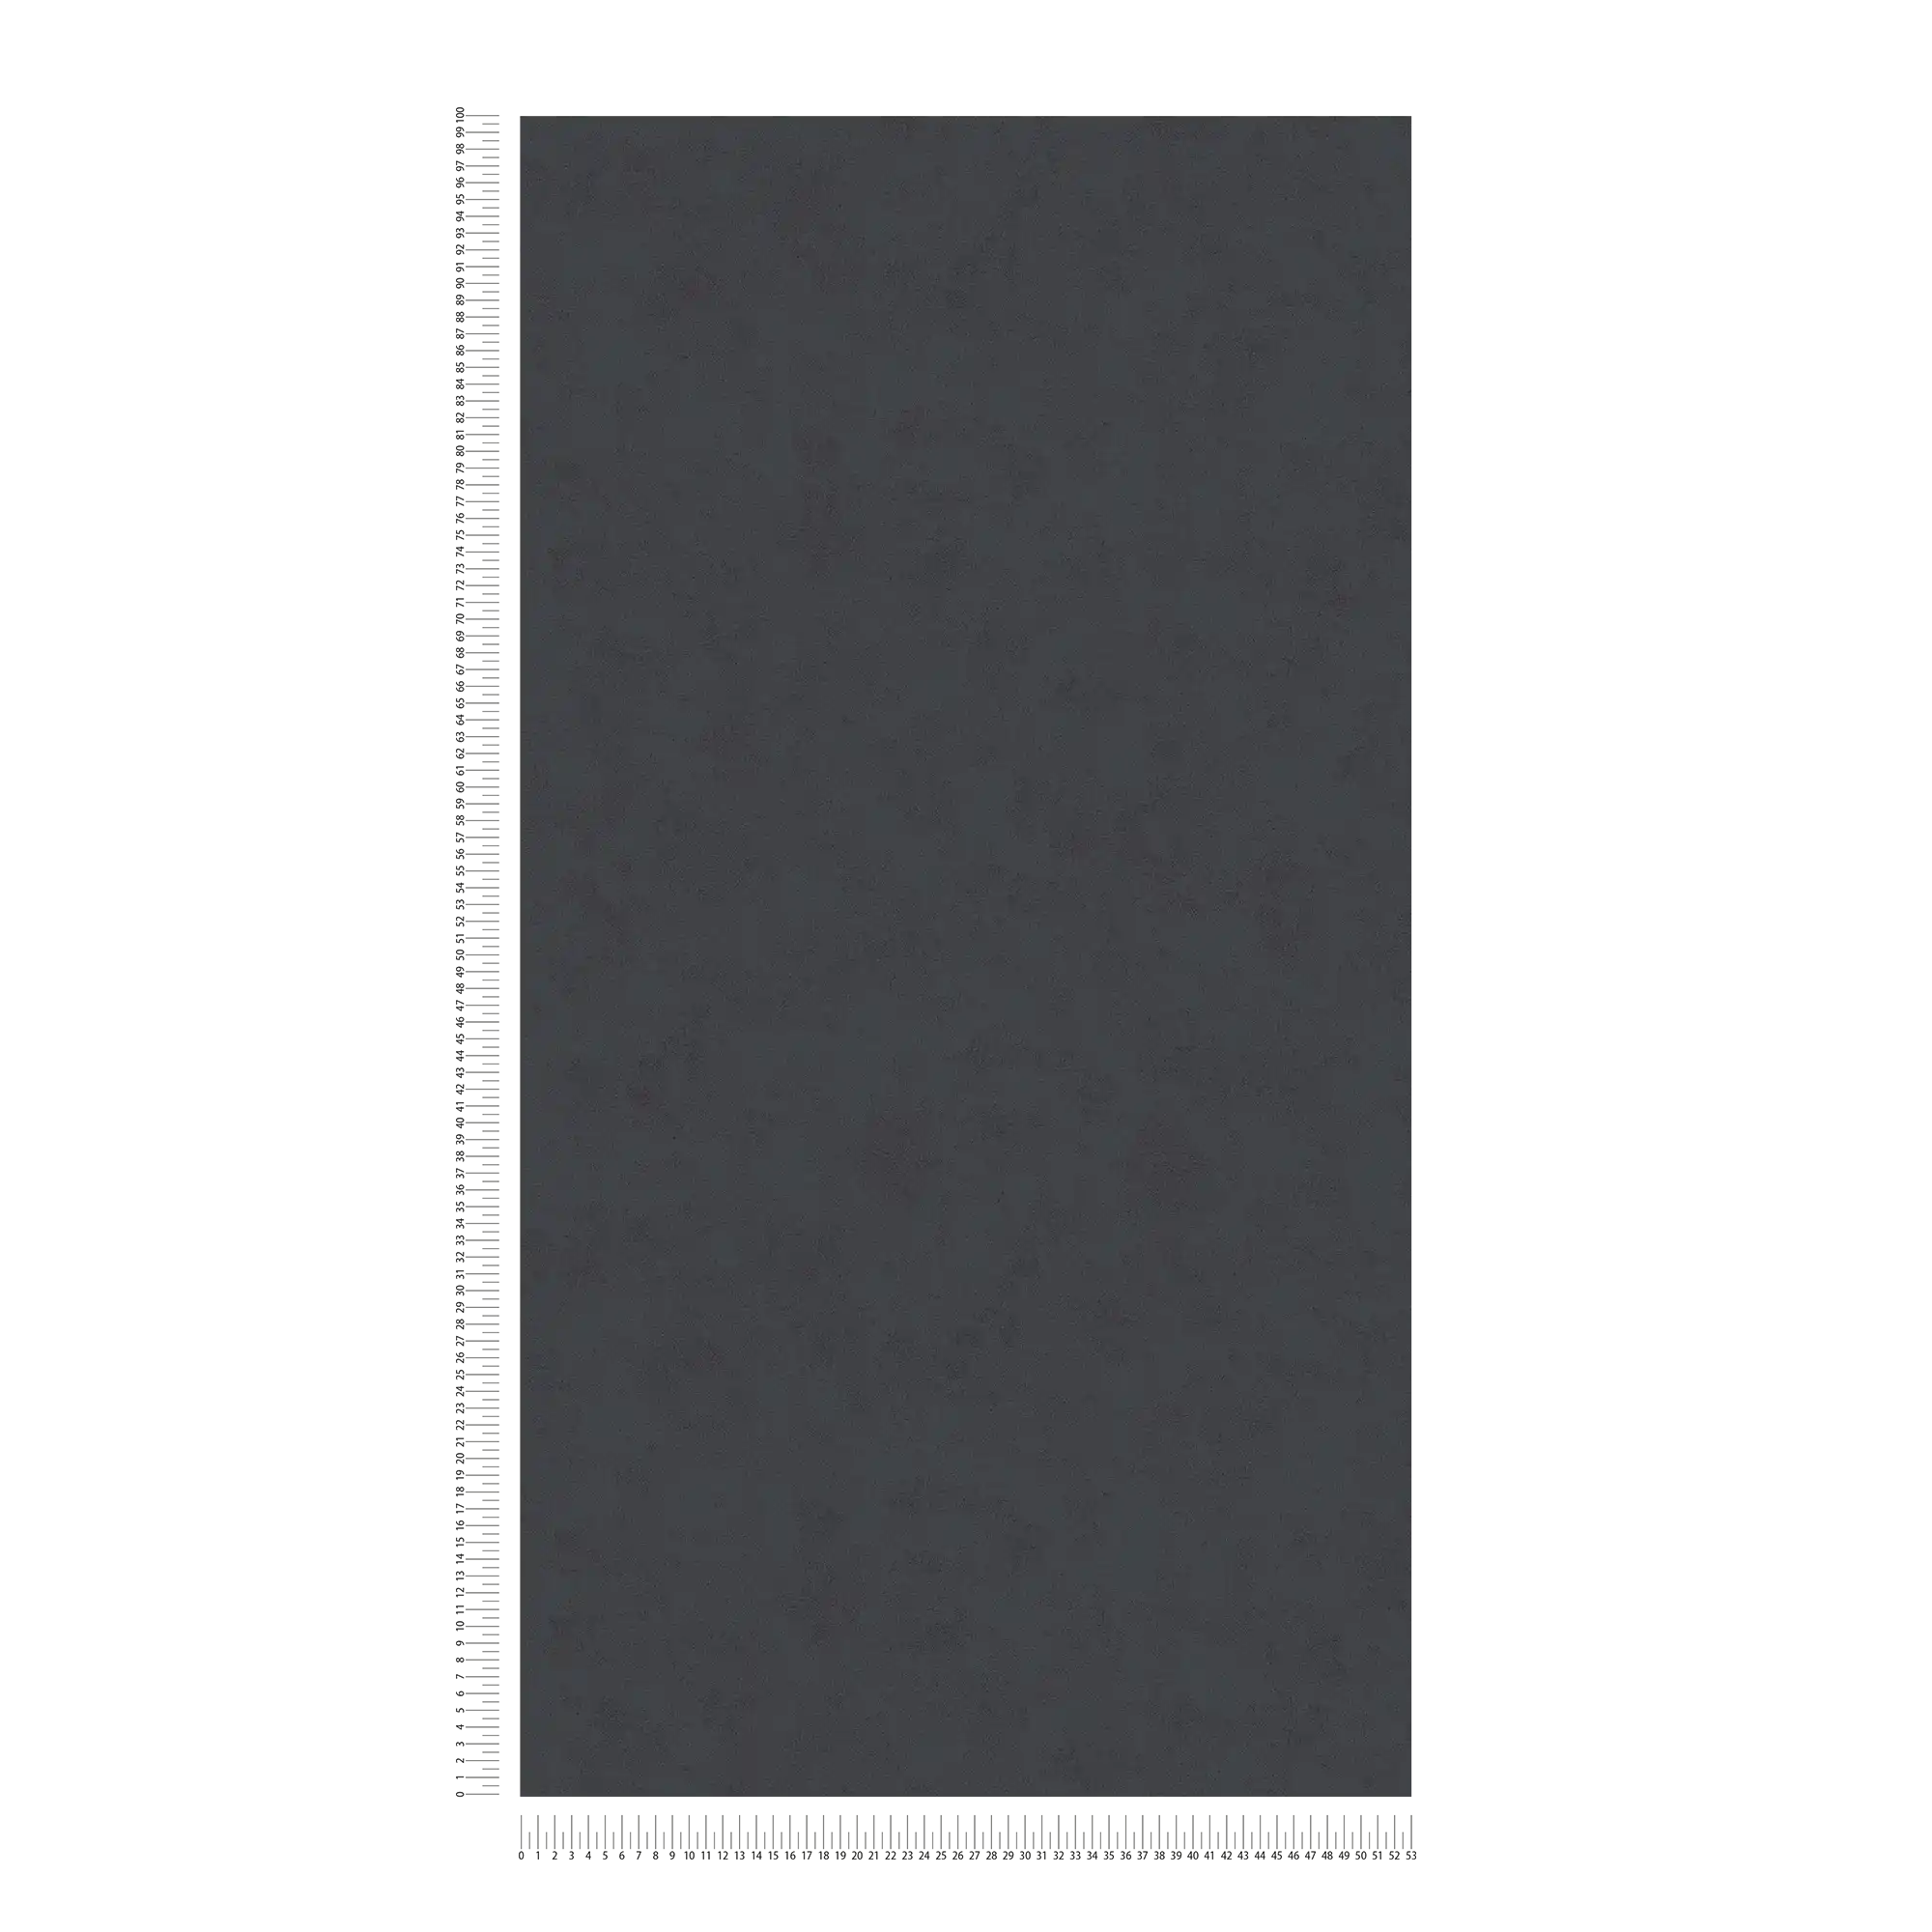             Papel pintado liso no tejido con estructura moteada - negro
        